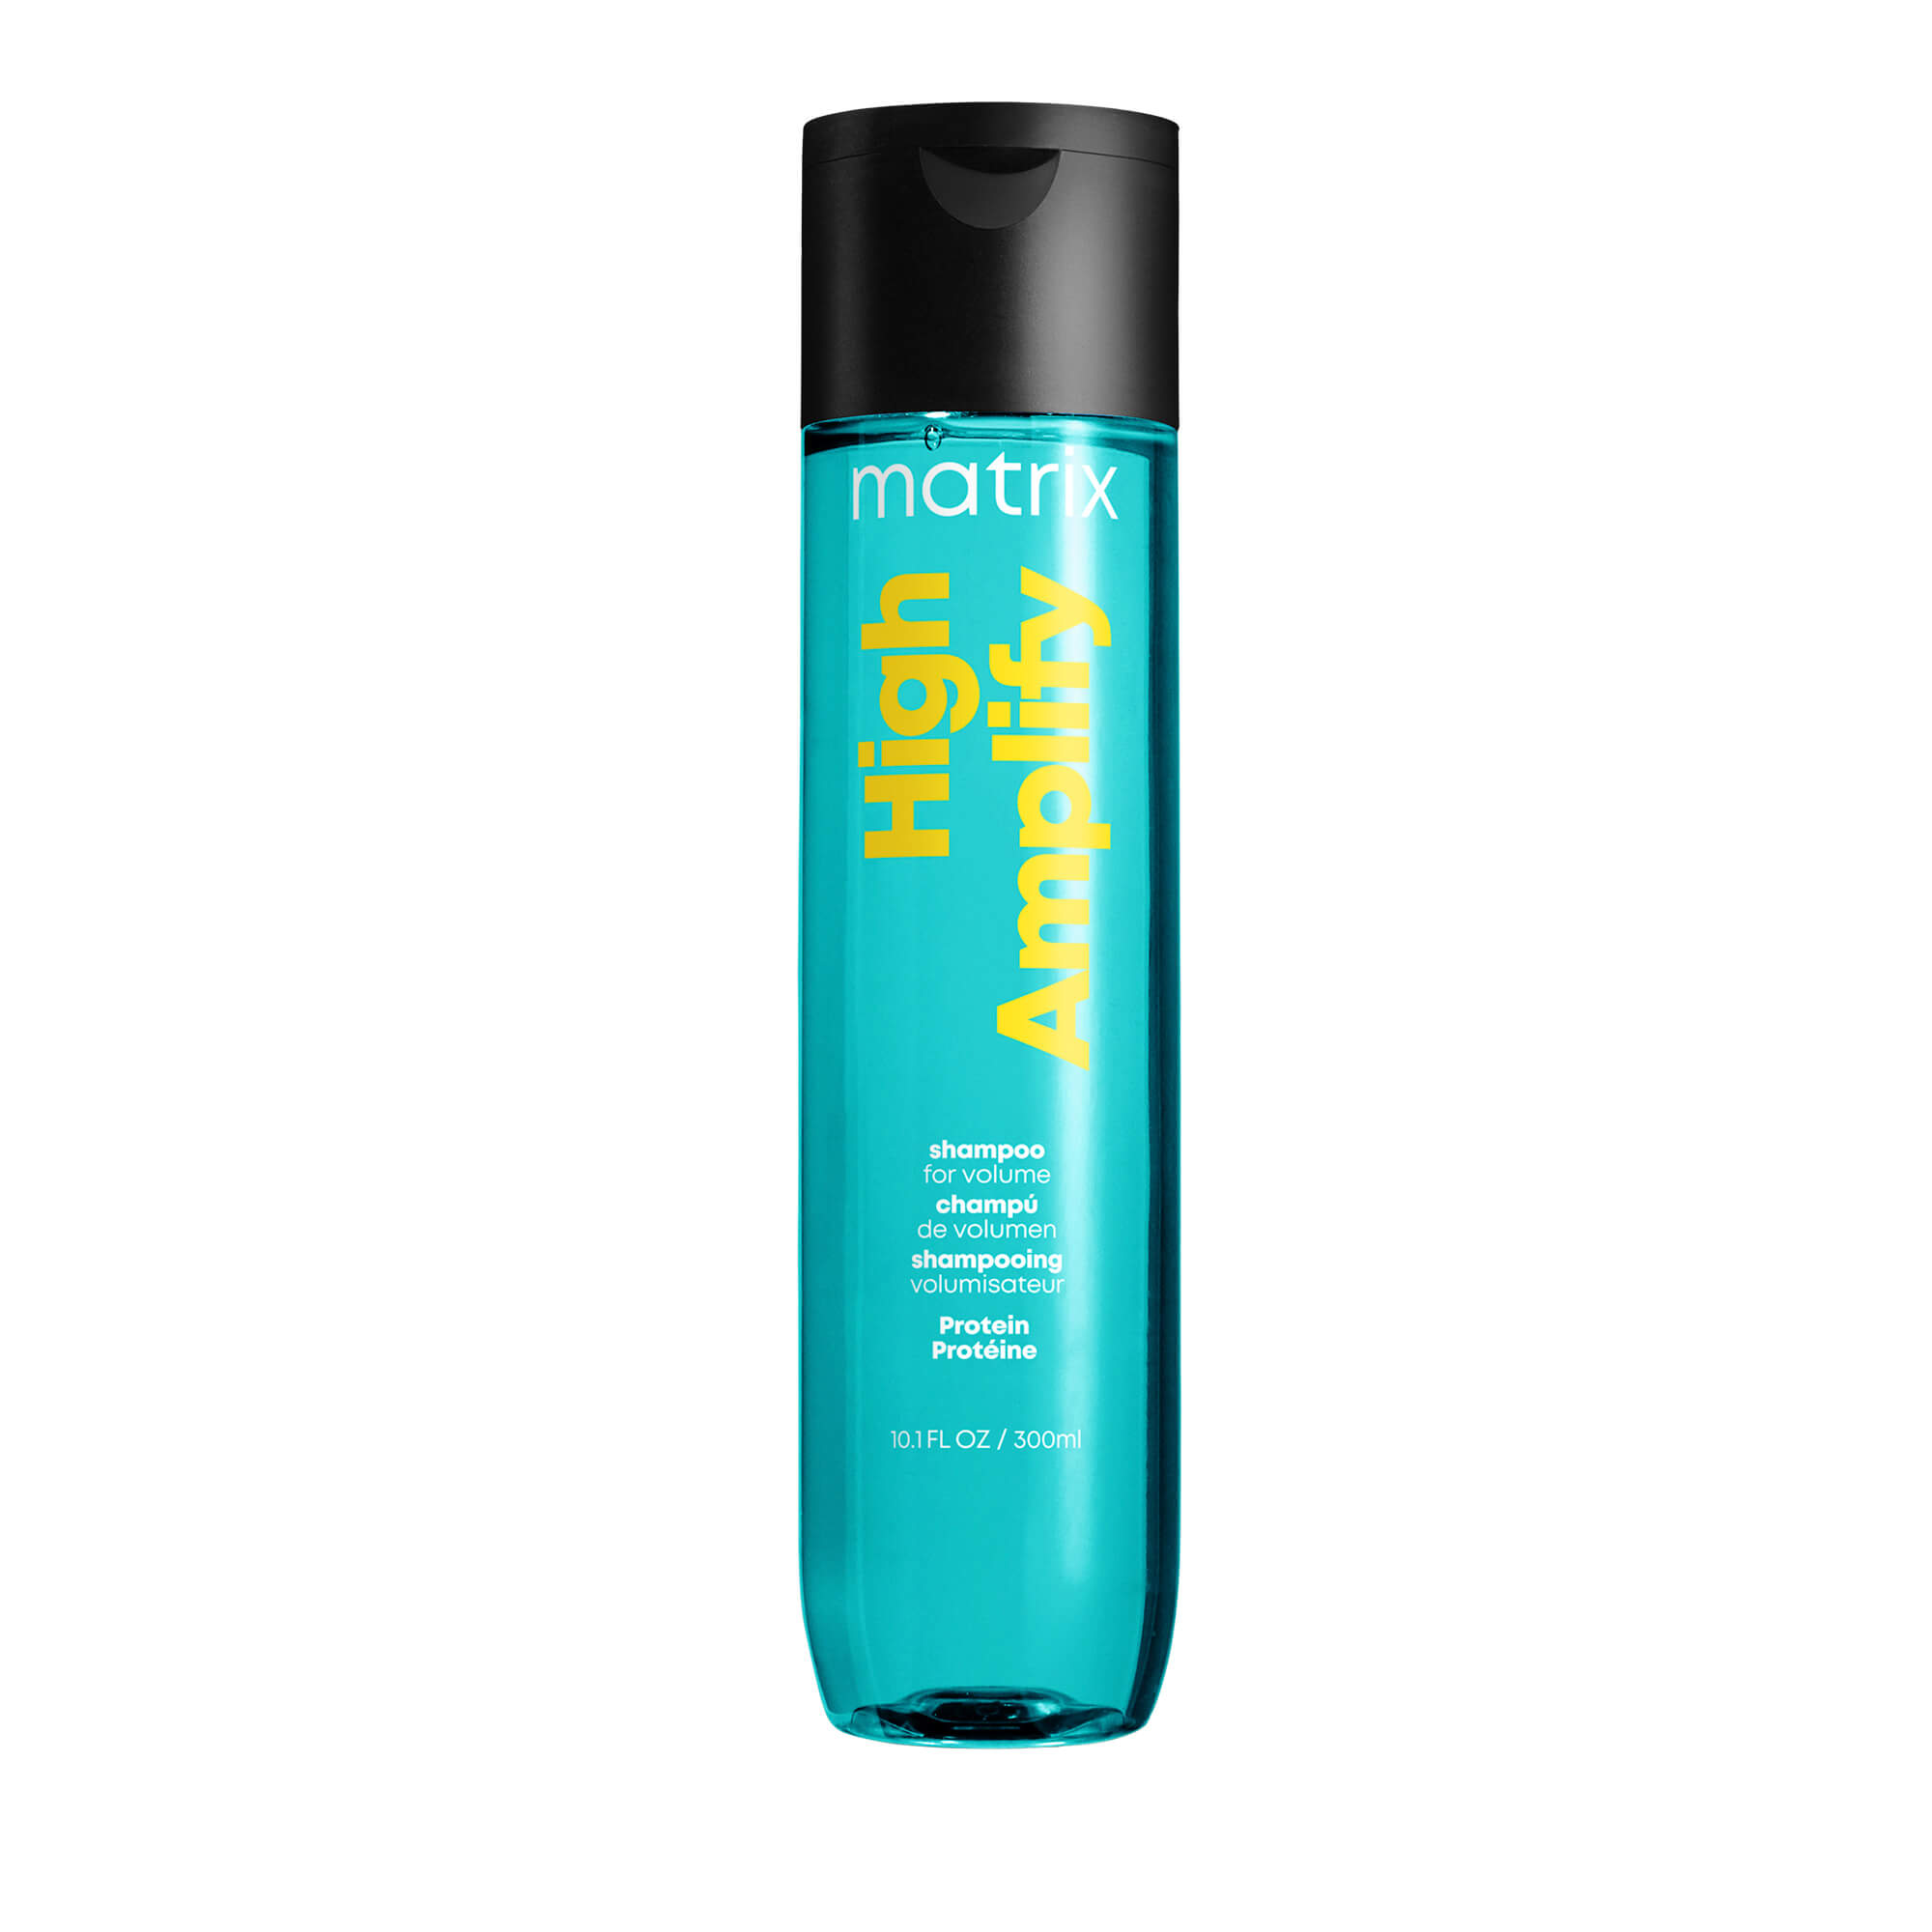 Matrix Total Results High Amplify Shampoo 